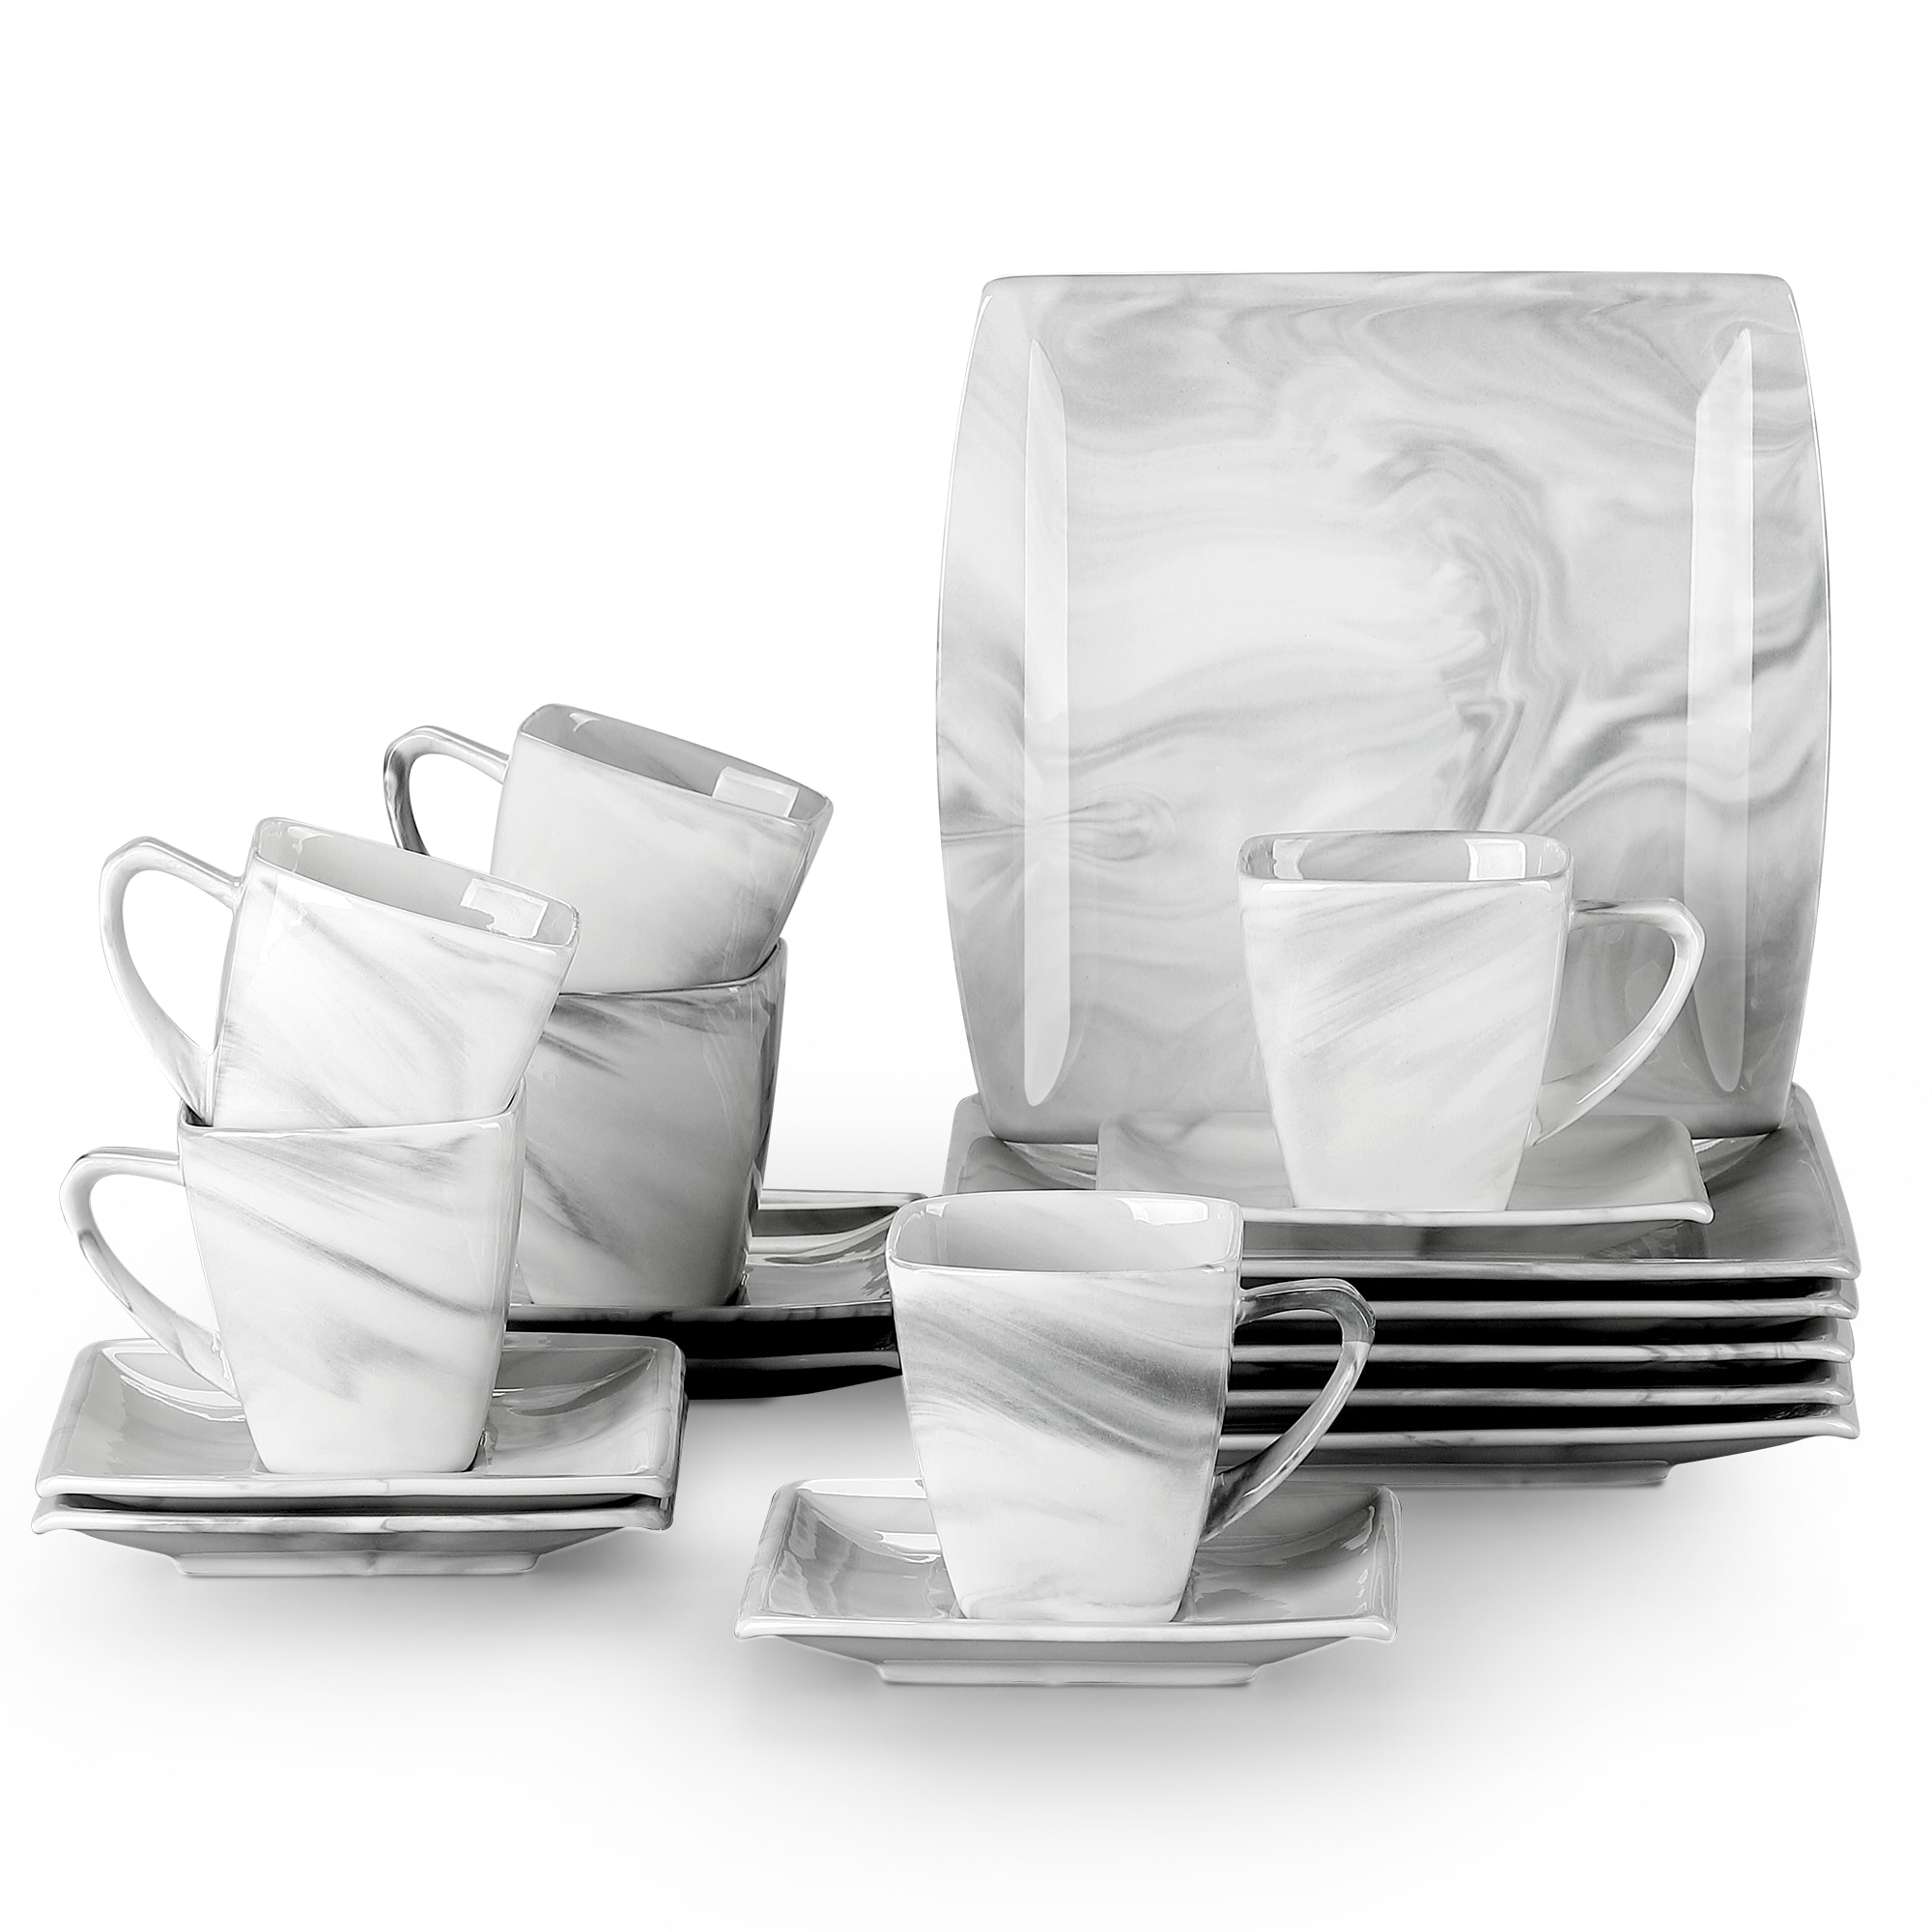 MALACASA Blance 32 Pieces Marble Grey Porcelain Dinnerware Set